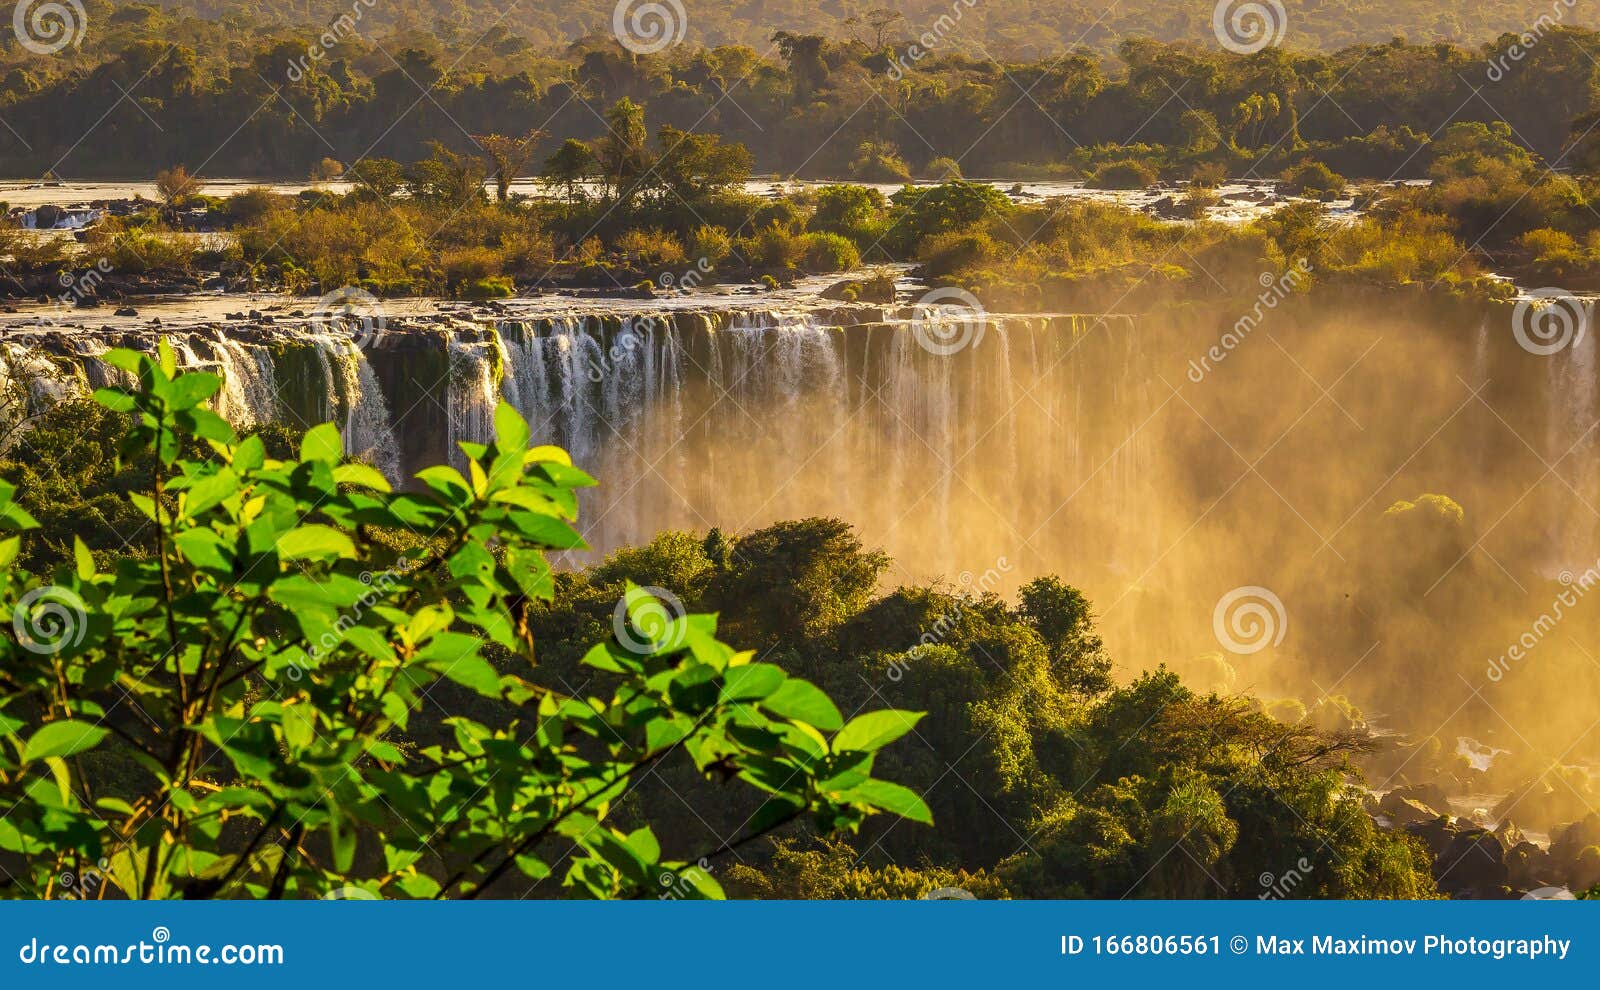 igauzu waterfall, brazil - colorful iguazu waterfall - cataratas do iguasu, brasil unesco world heritage